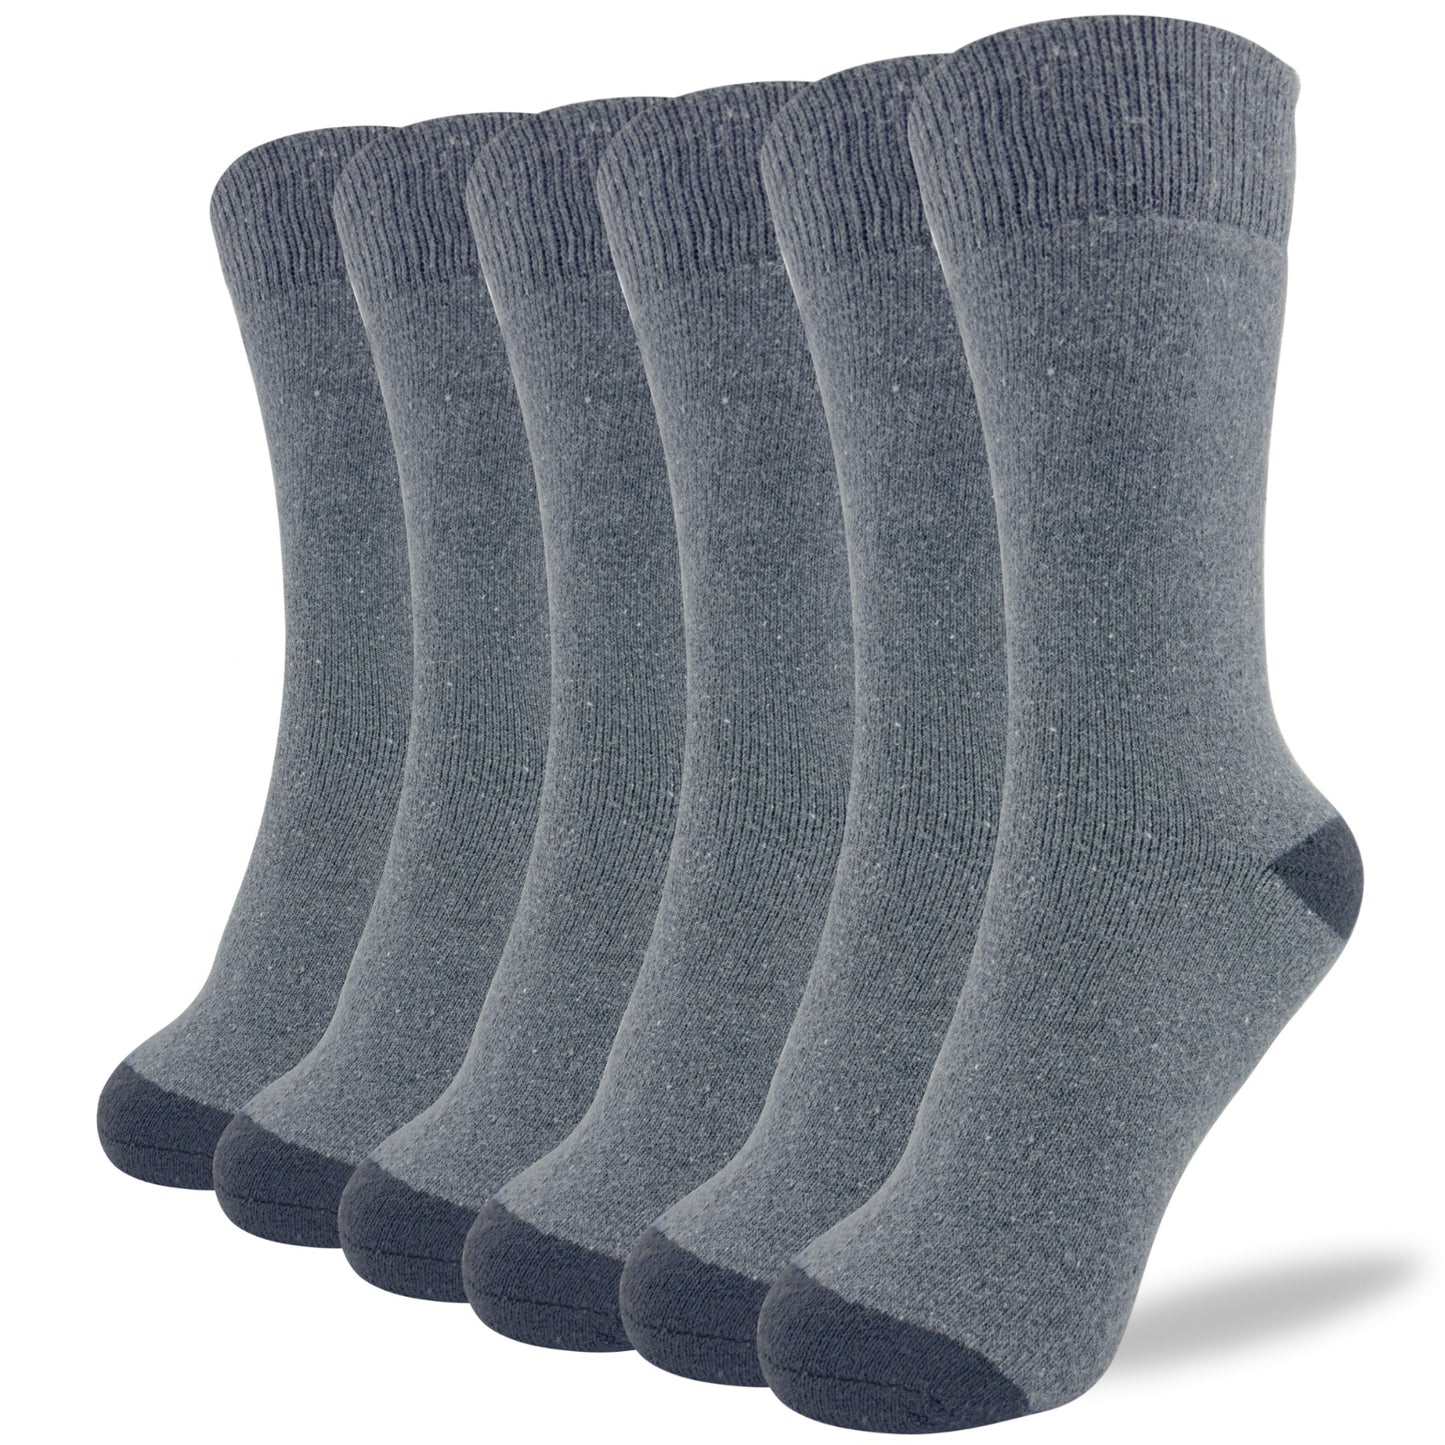 Dress Socks - Formal & Casual Wear Cotton Mens Socks Multipack (Pack of 6)